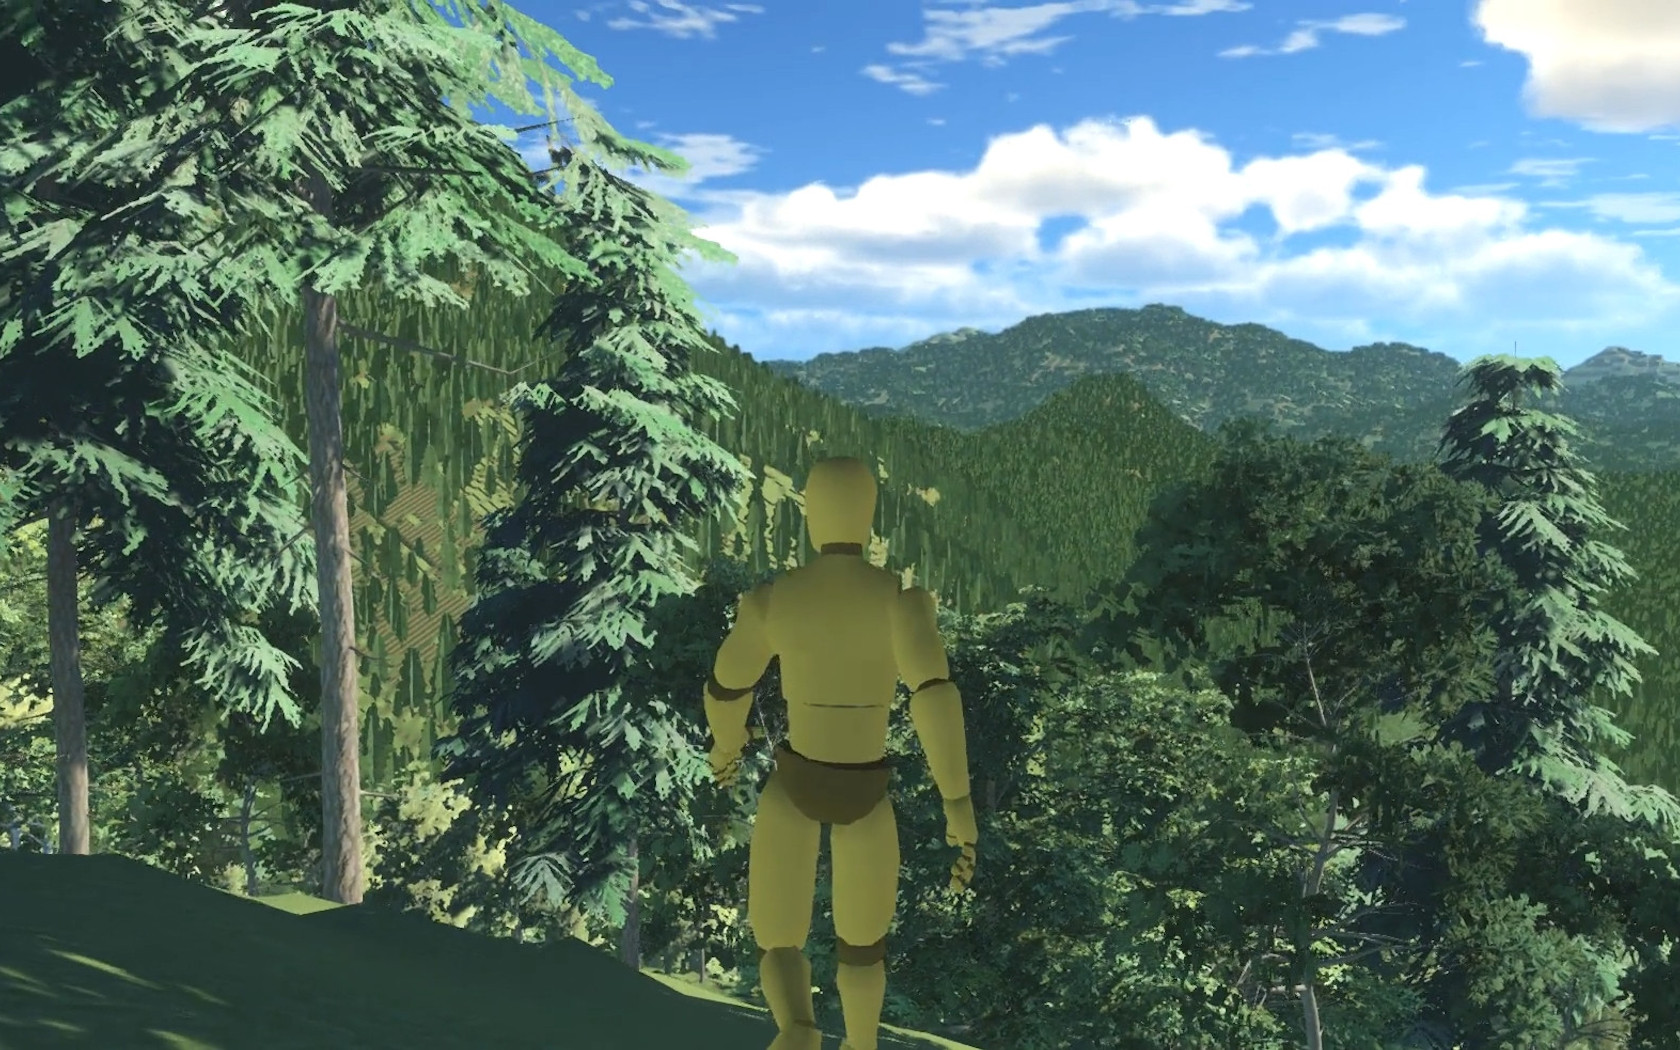 Terrain Forest Generator Procedural Game Videogame Mist Realms MistRealms Unity